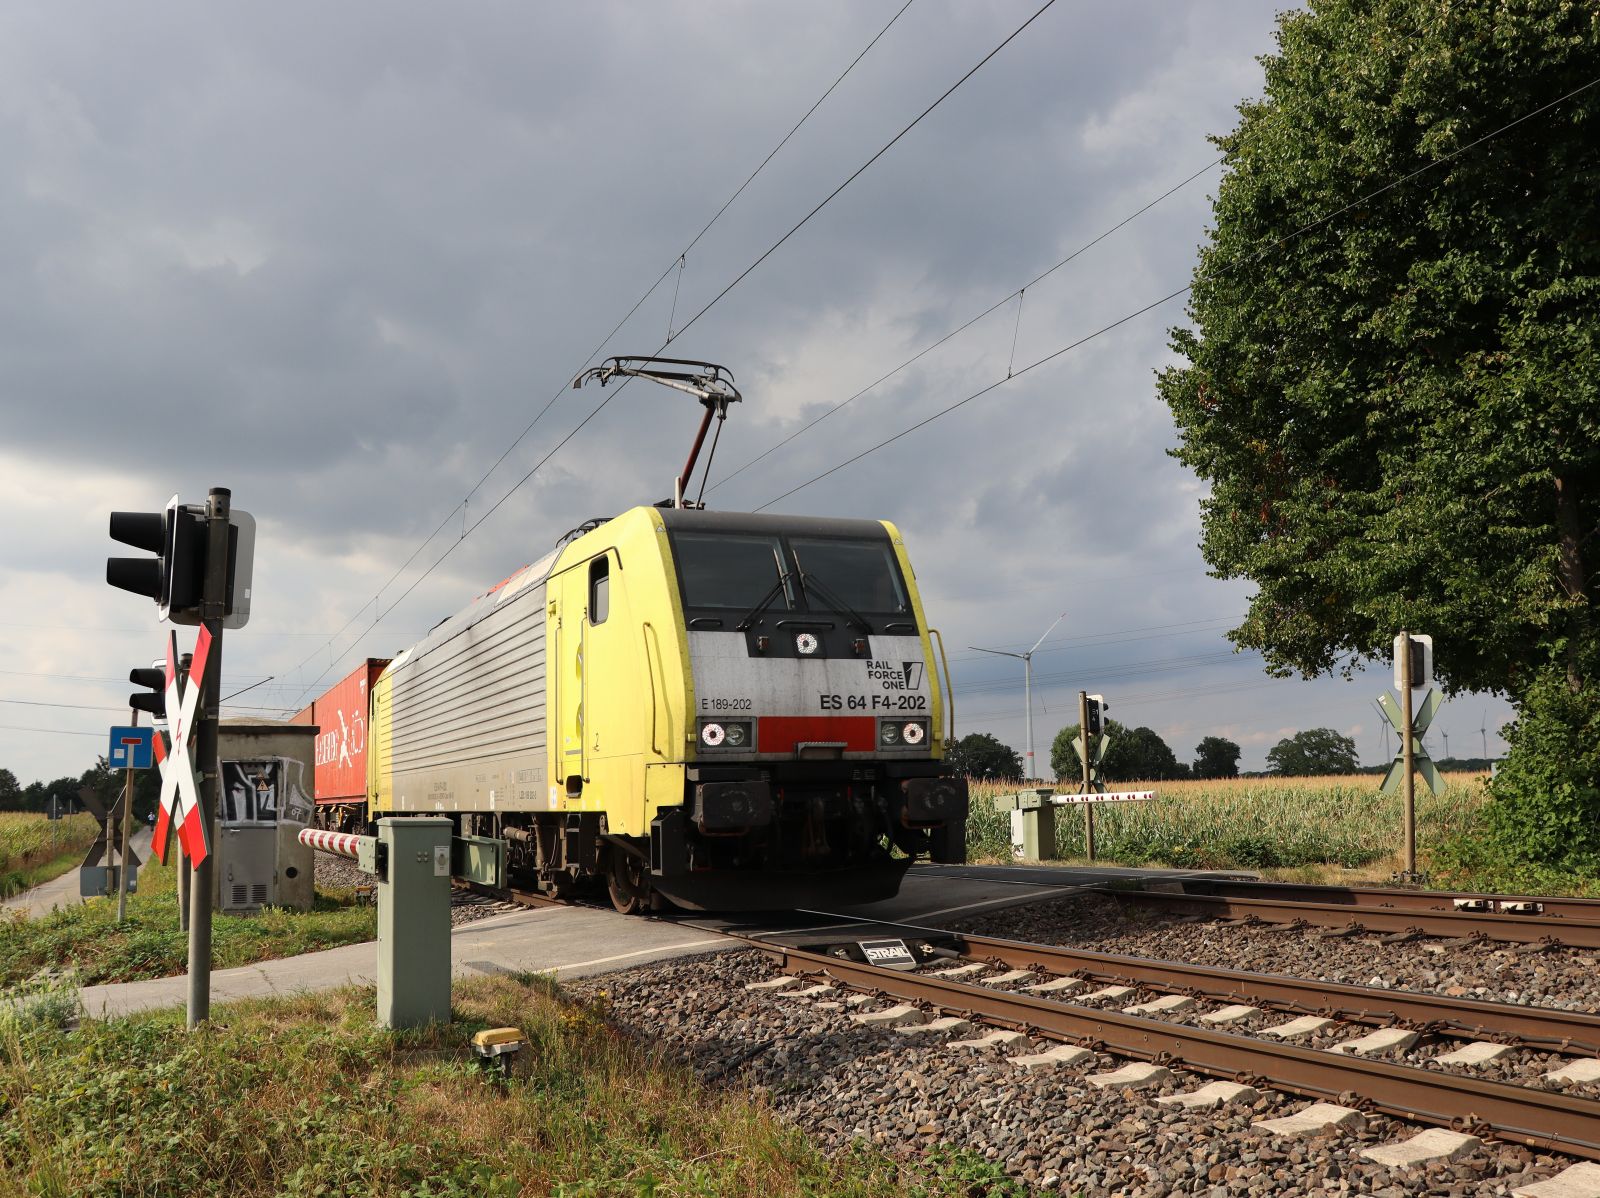 Rail Force One Lokomotive 189 202-5 ( 91 80 6189 202-5 D-DISPO ) bei Baahnübergang Wasserstrasse, Hamminkeln 18-08-2022.

Rail Force One locomotief 189 202-5 ( 91 80 6189 202-5 D-DISPO ) bij overweg Wasserstrasse, Hamminkeln 18-08-2022.